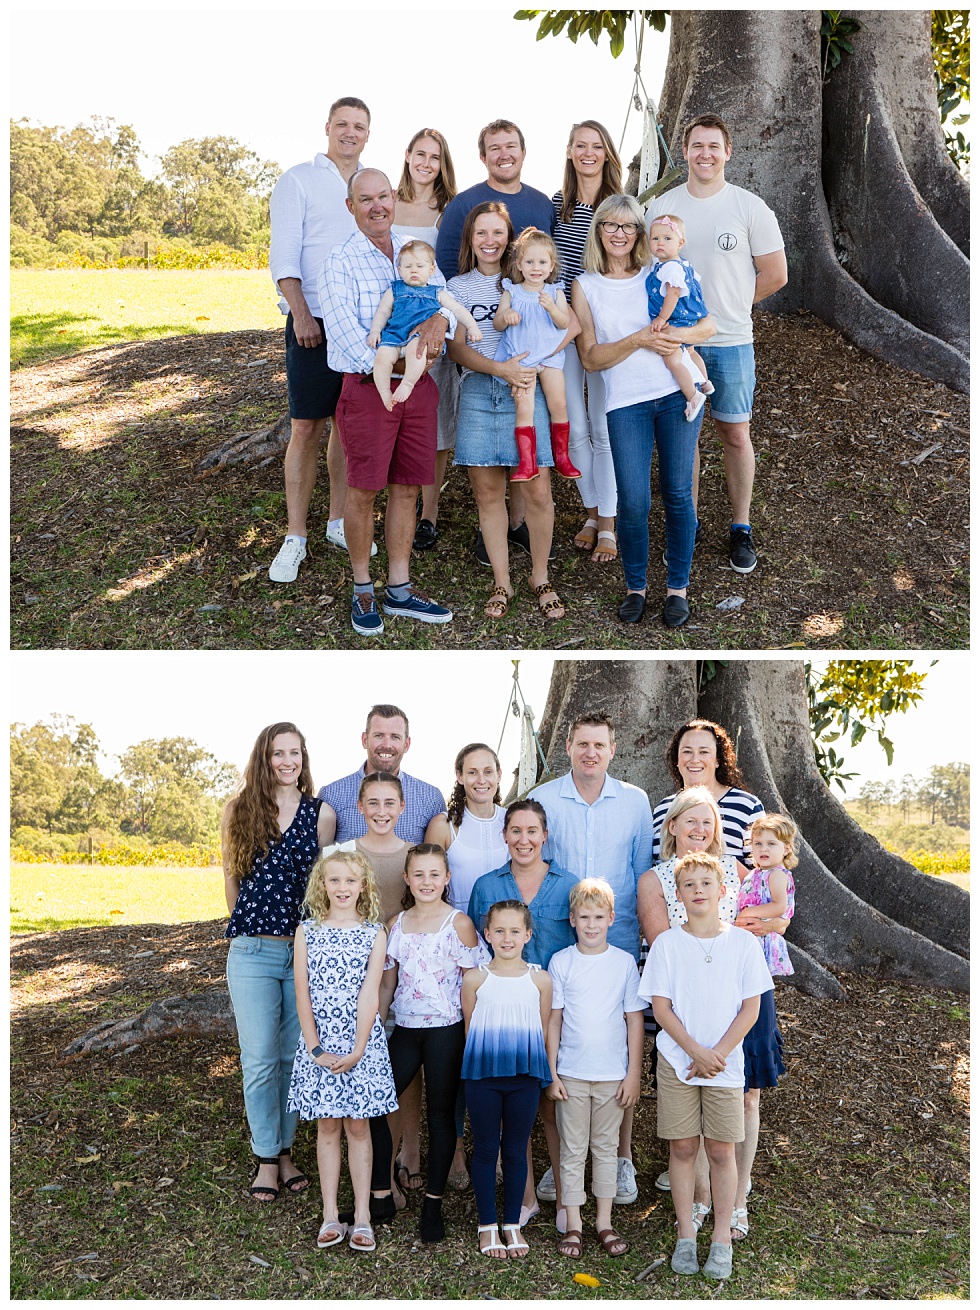 ArtyJ Photography | Ben Ean, Pokolbin, NSW, Hunter Valley, Photography, Family Portraits, Portraits | Everett Family Reunion | Portraits